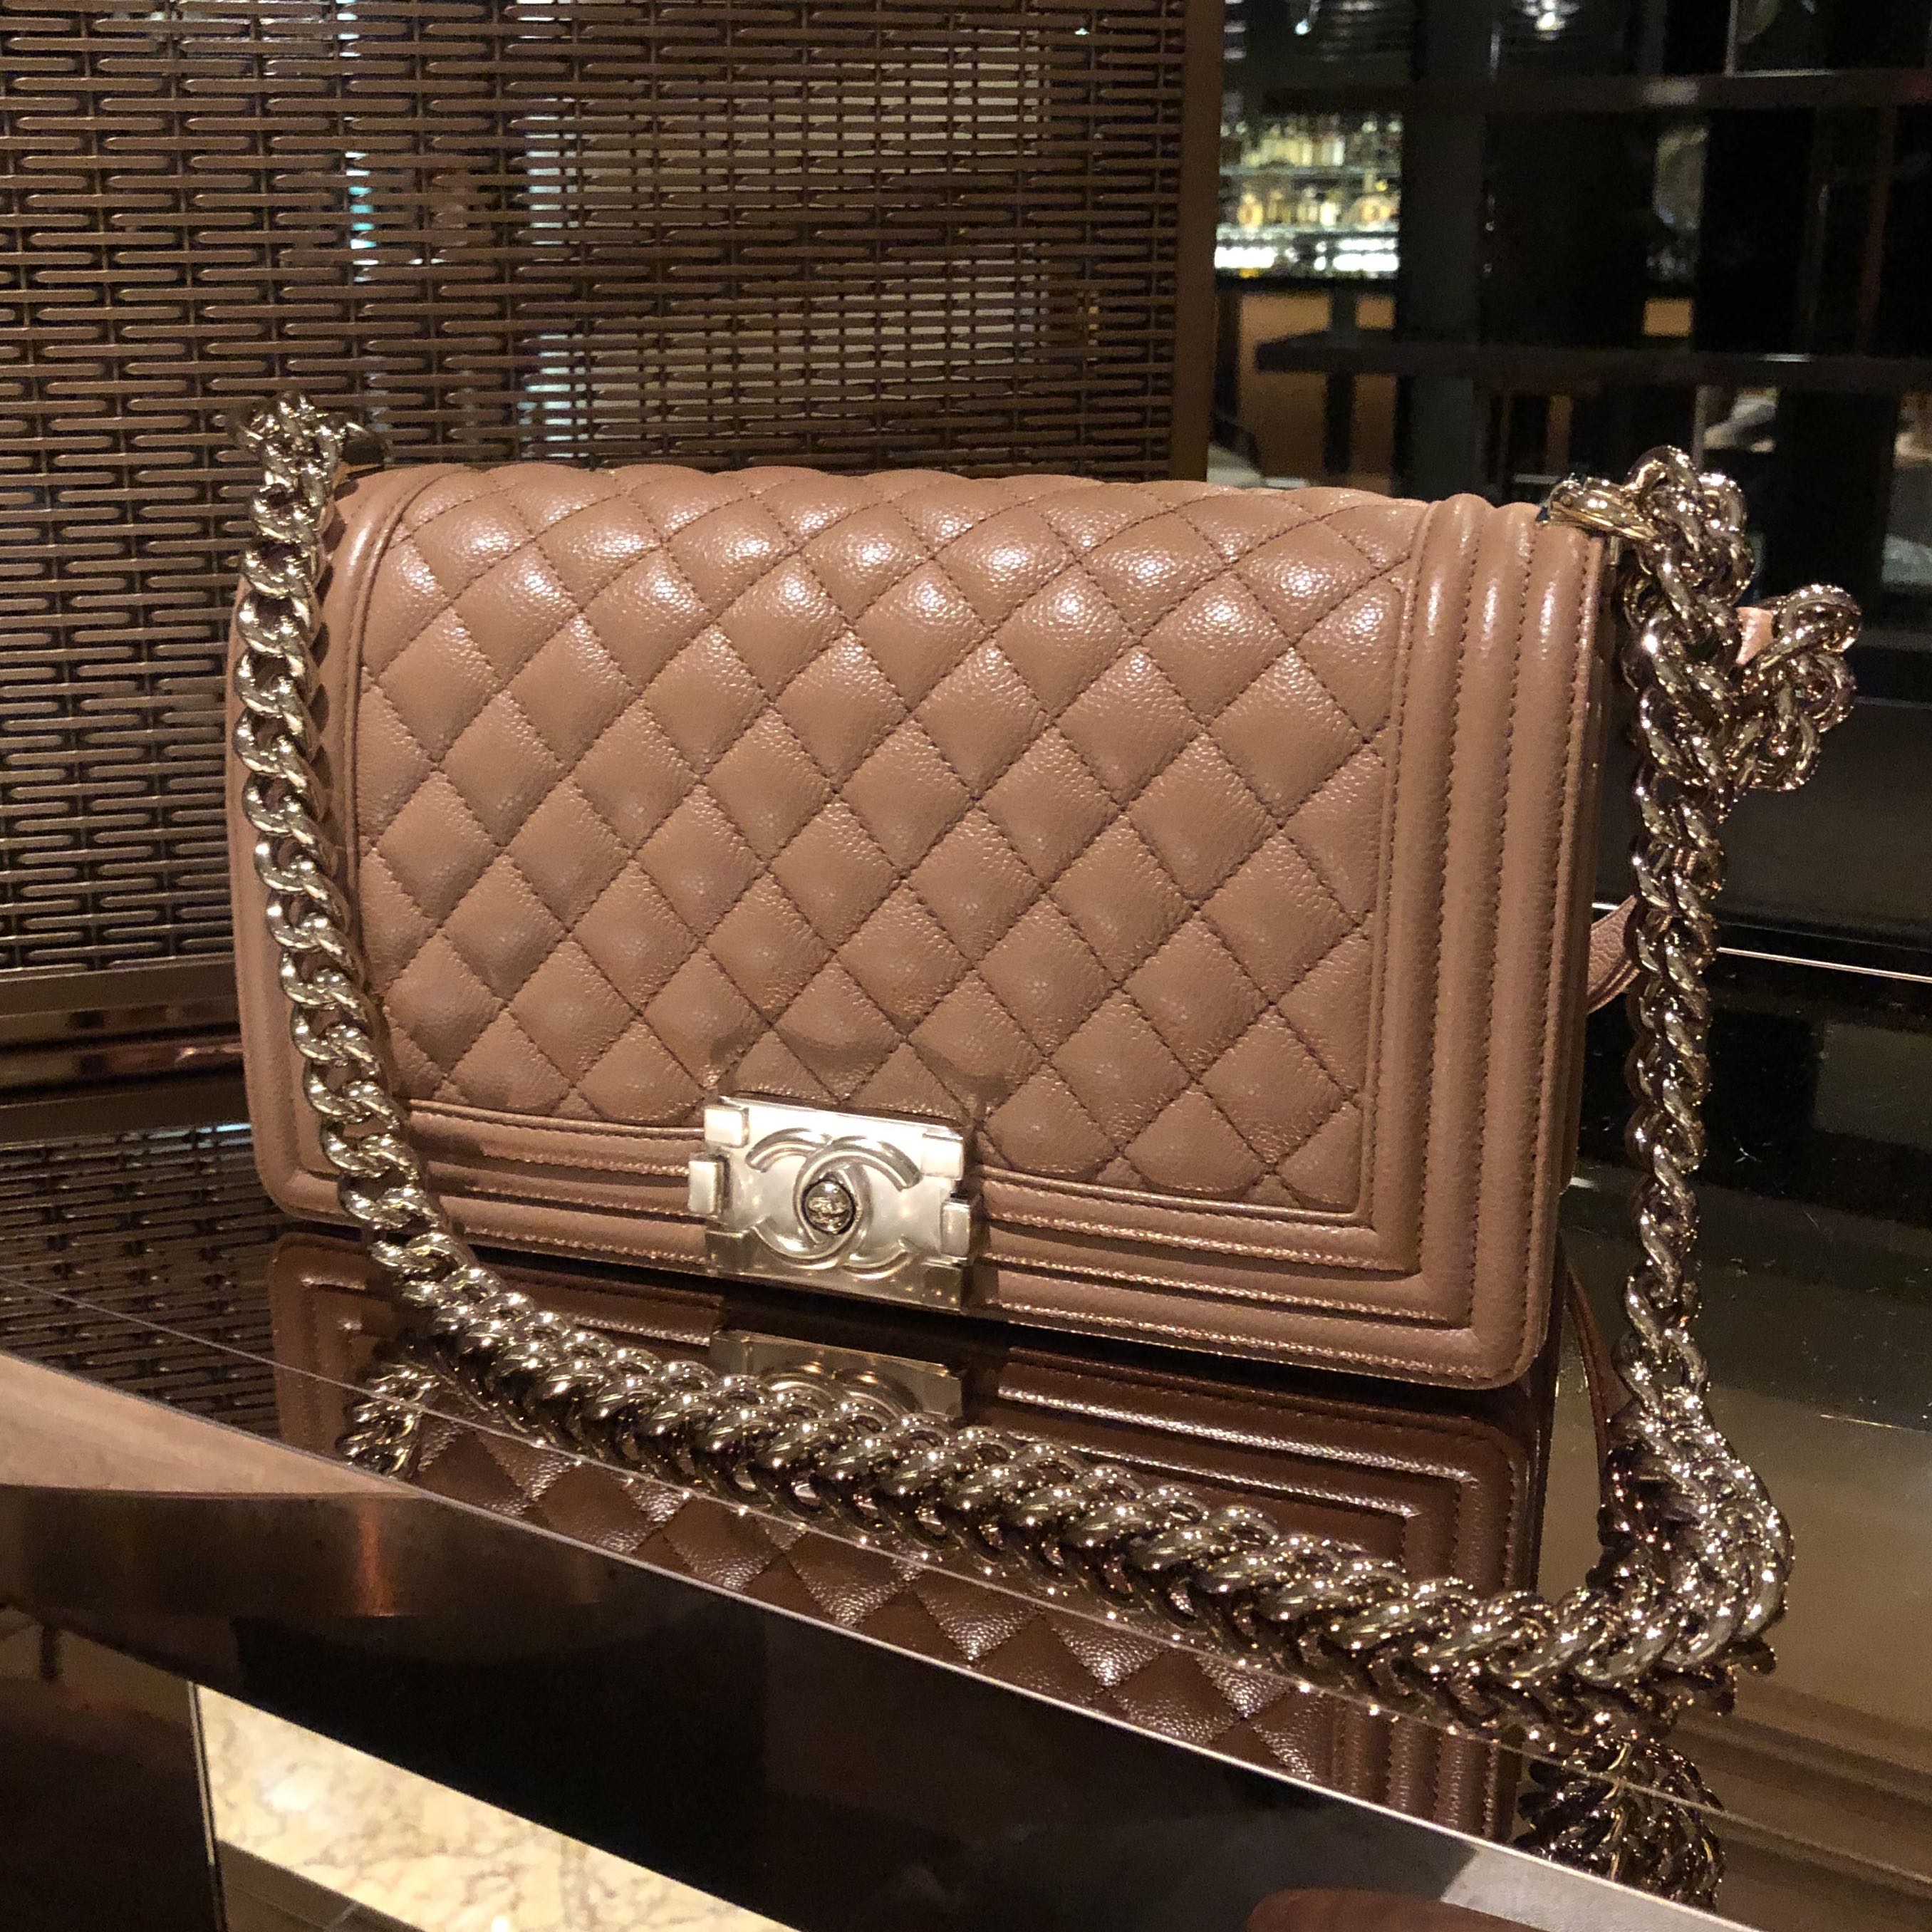 Chanel Boy Handbag brown